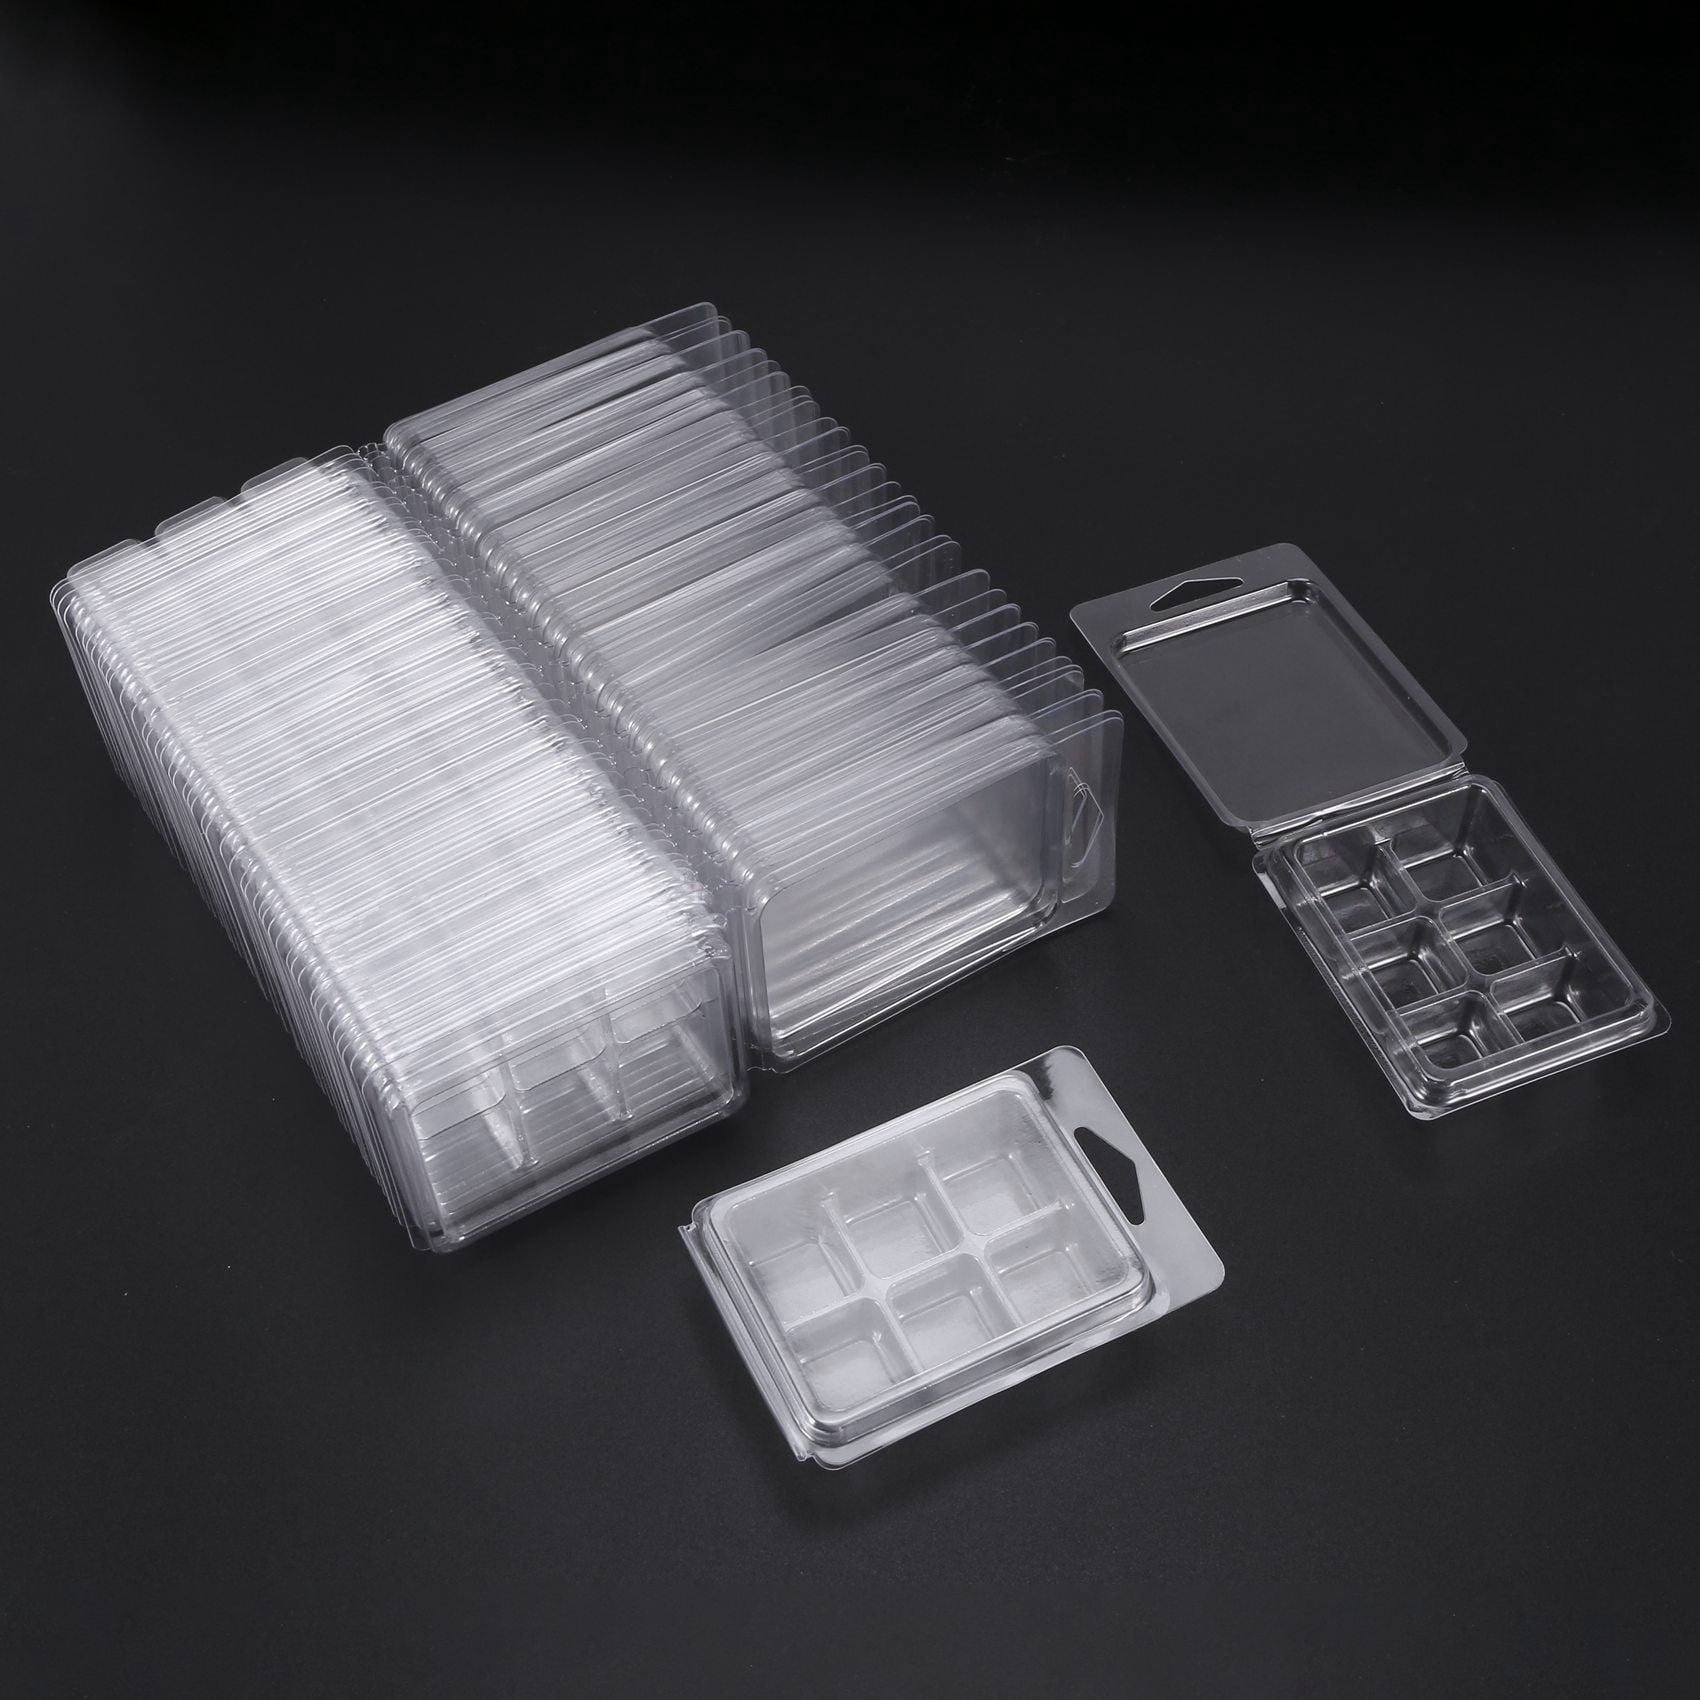 Yych Wax Melt Molds - 100 Packs Clear Empty Plastic Wax Melt Clamshells for Wickless Wax Melt Candles